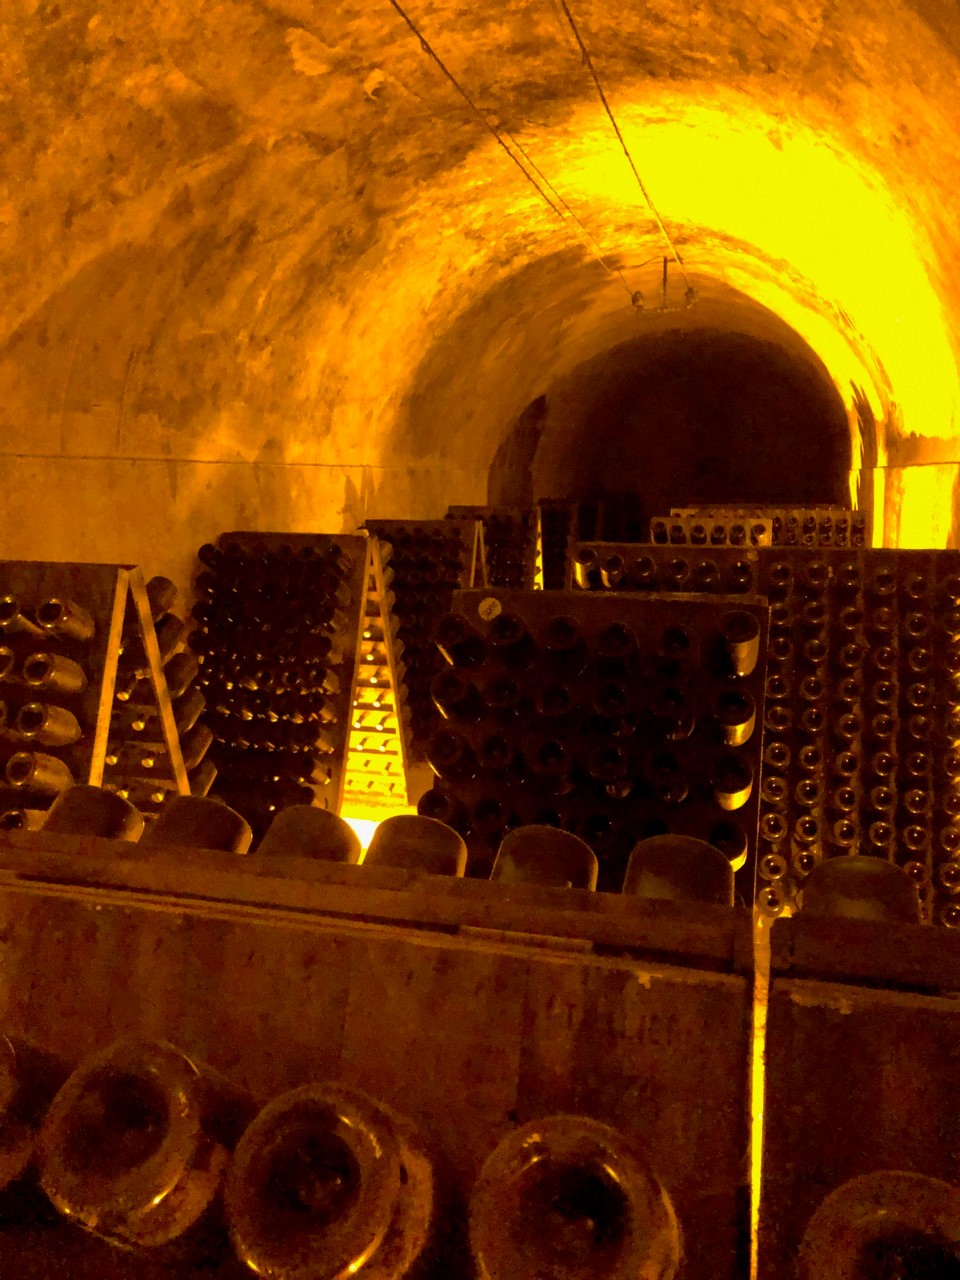 Large wine cellar